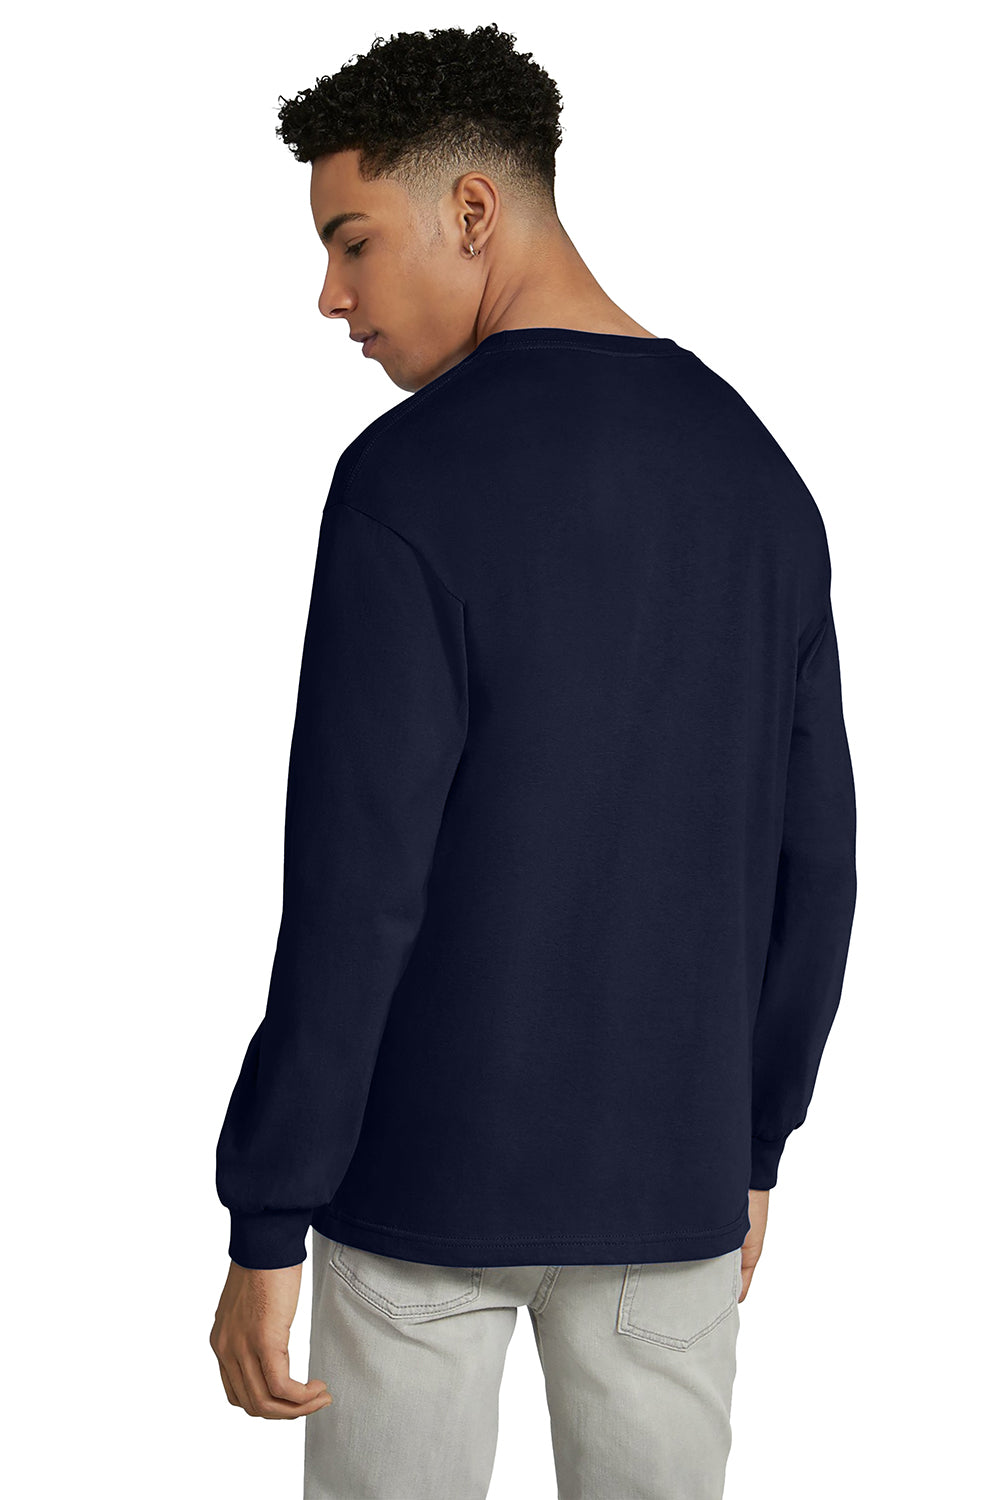 American Apparel AL1304/1304 Mens Long Sleeve Crewneck T-Shirt Navy Blue Model Back